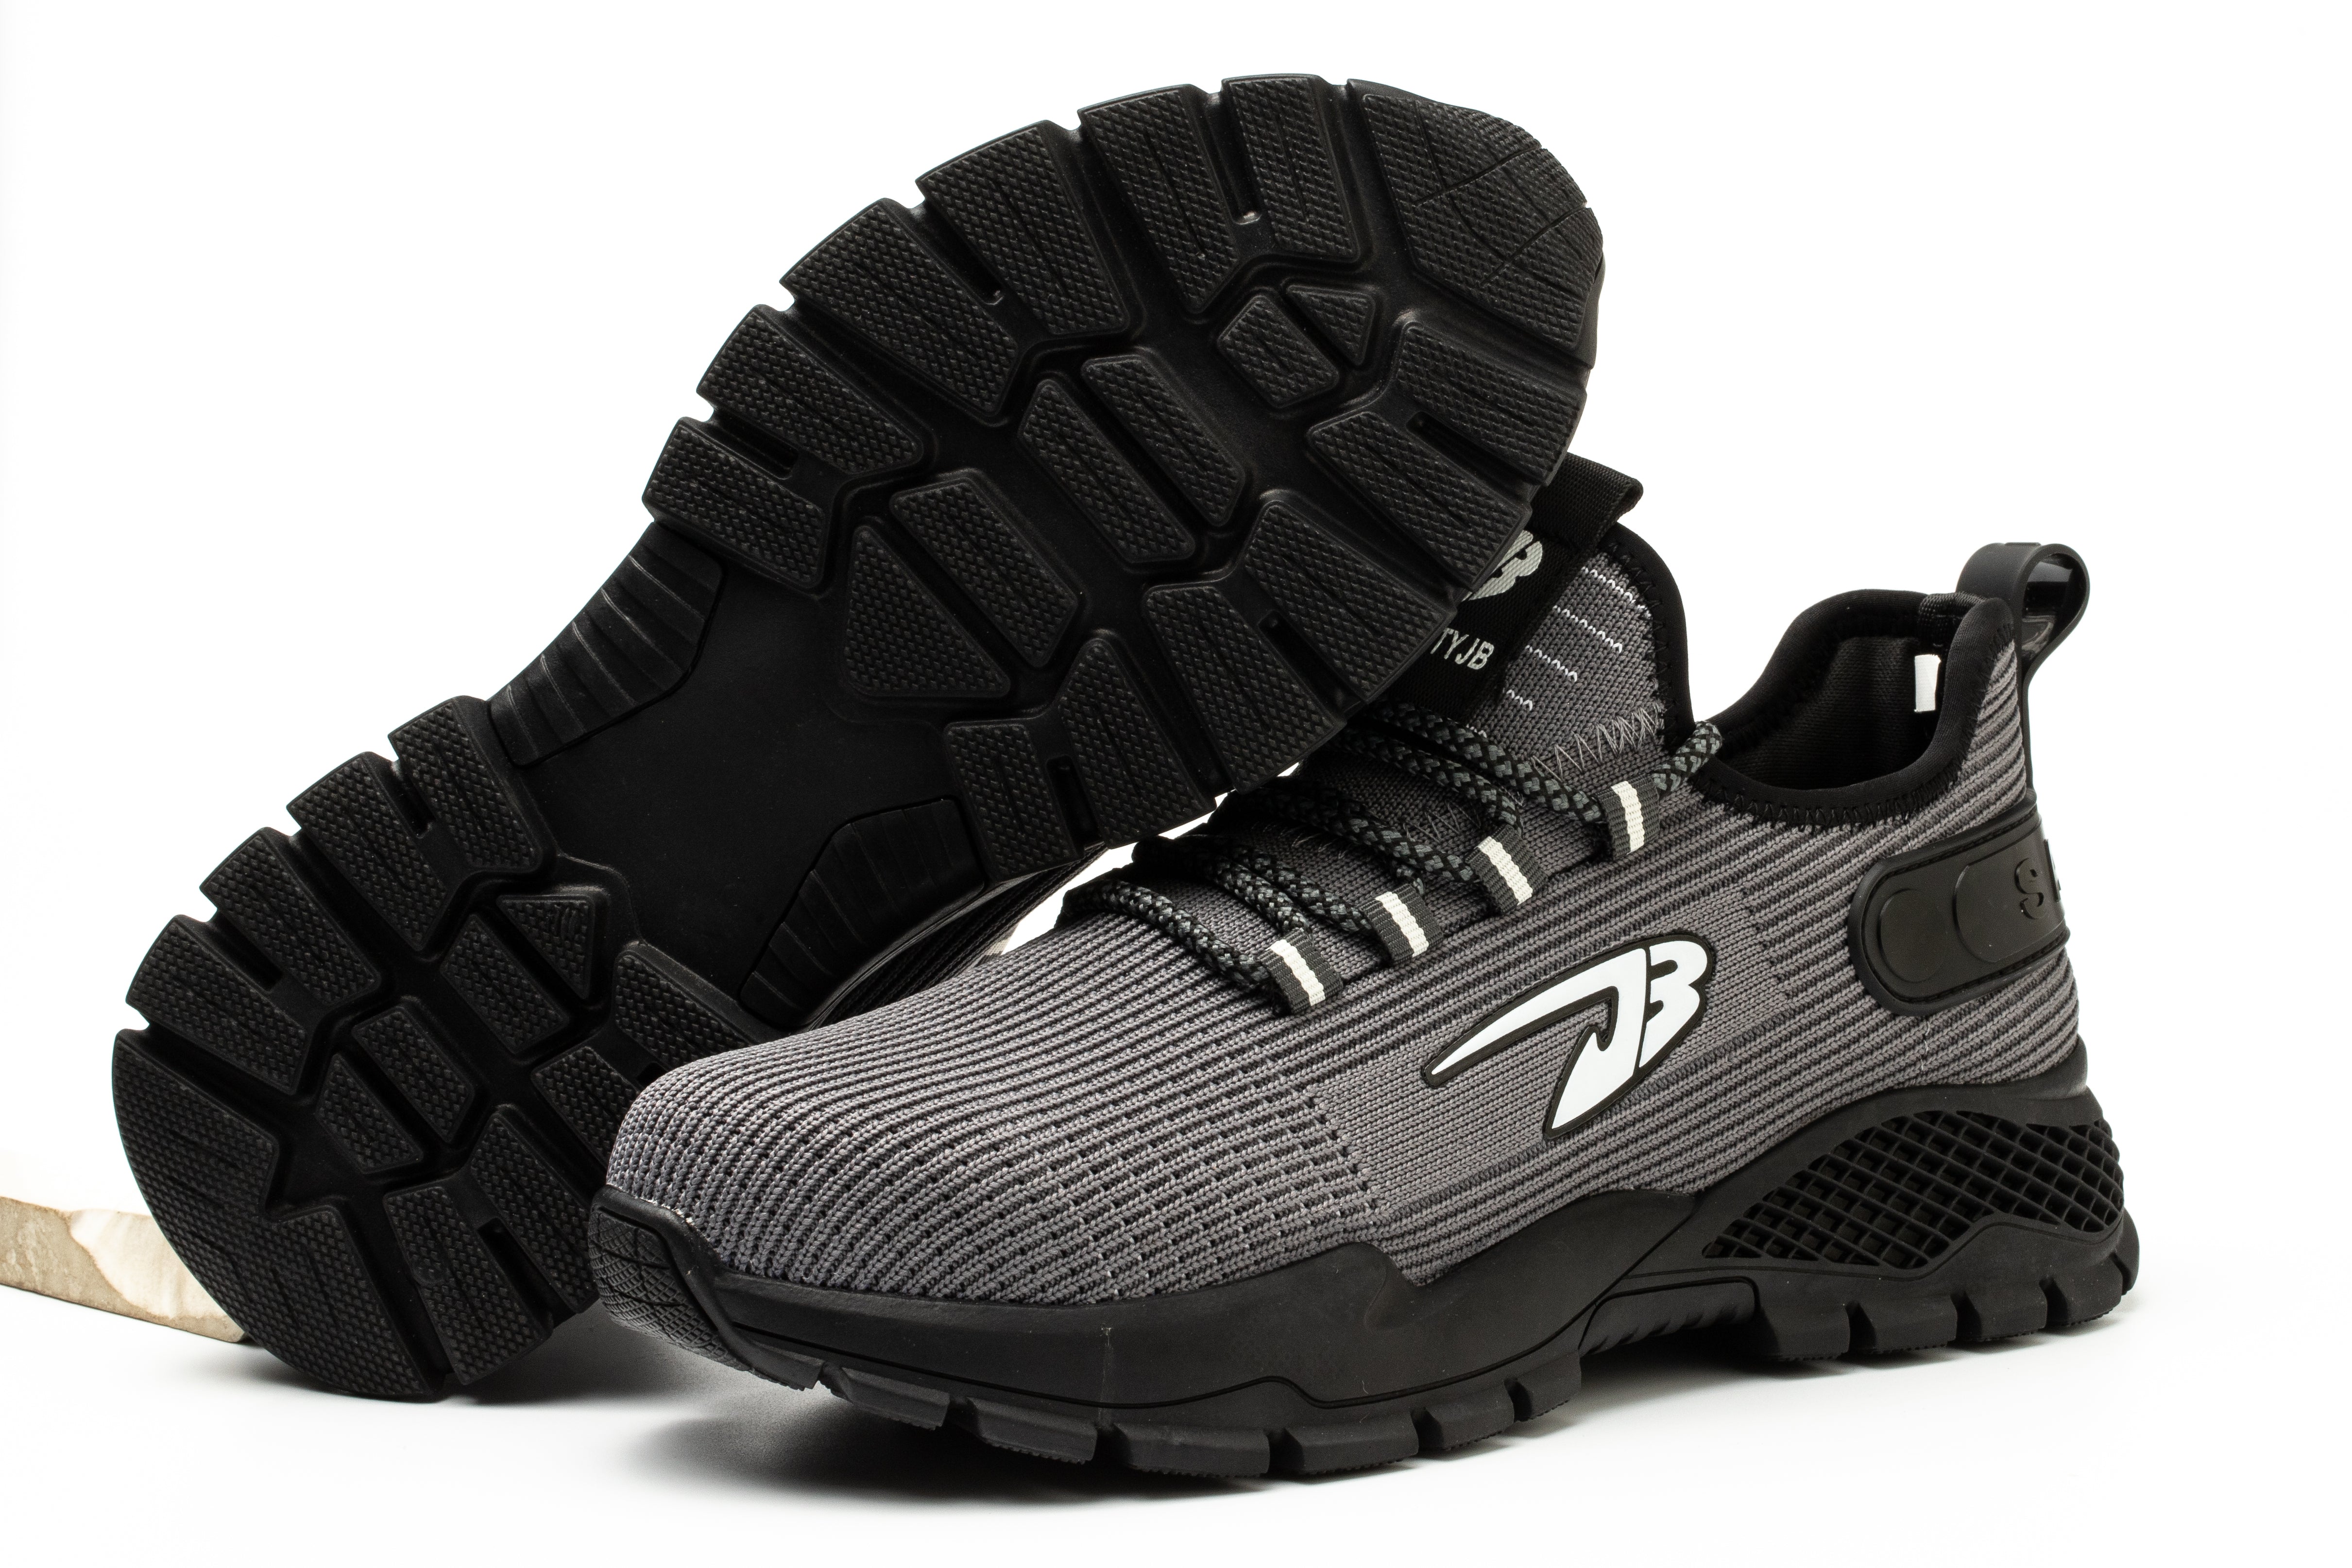 YSK 667: Comfortable Steel Toe Safety Shoes (anti-slip, anti-smash 